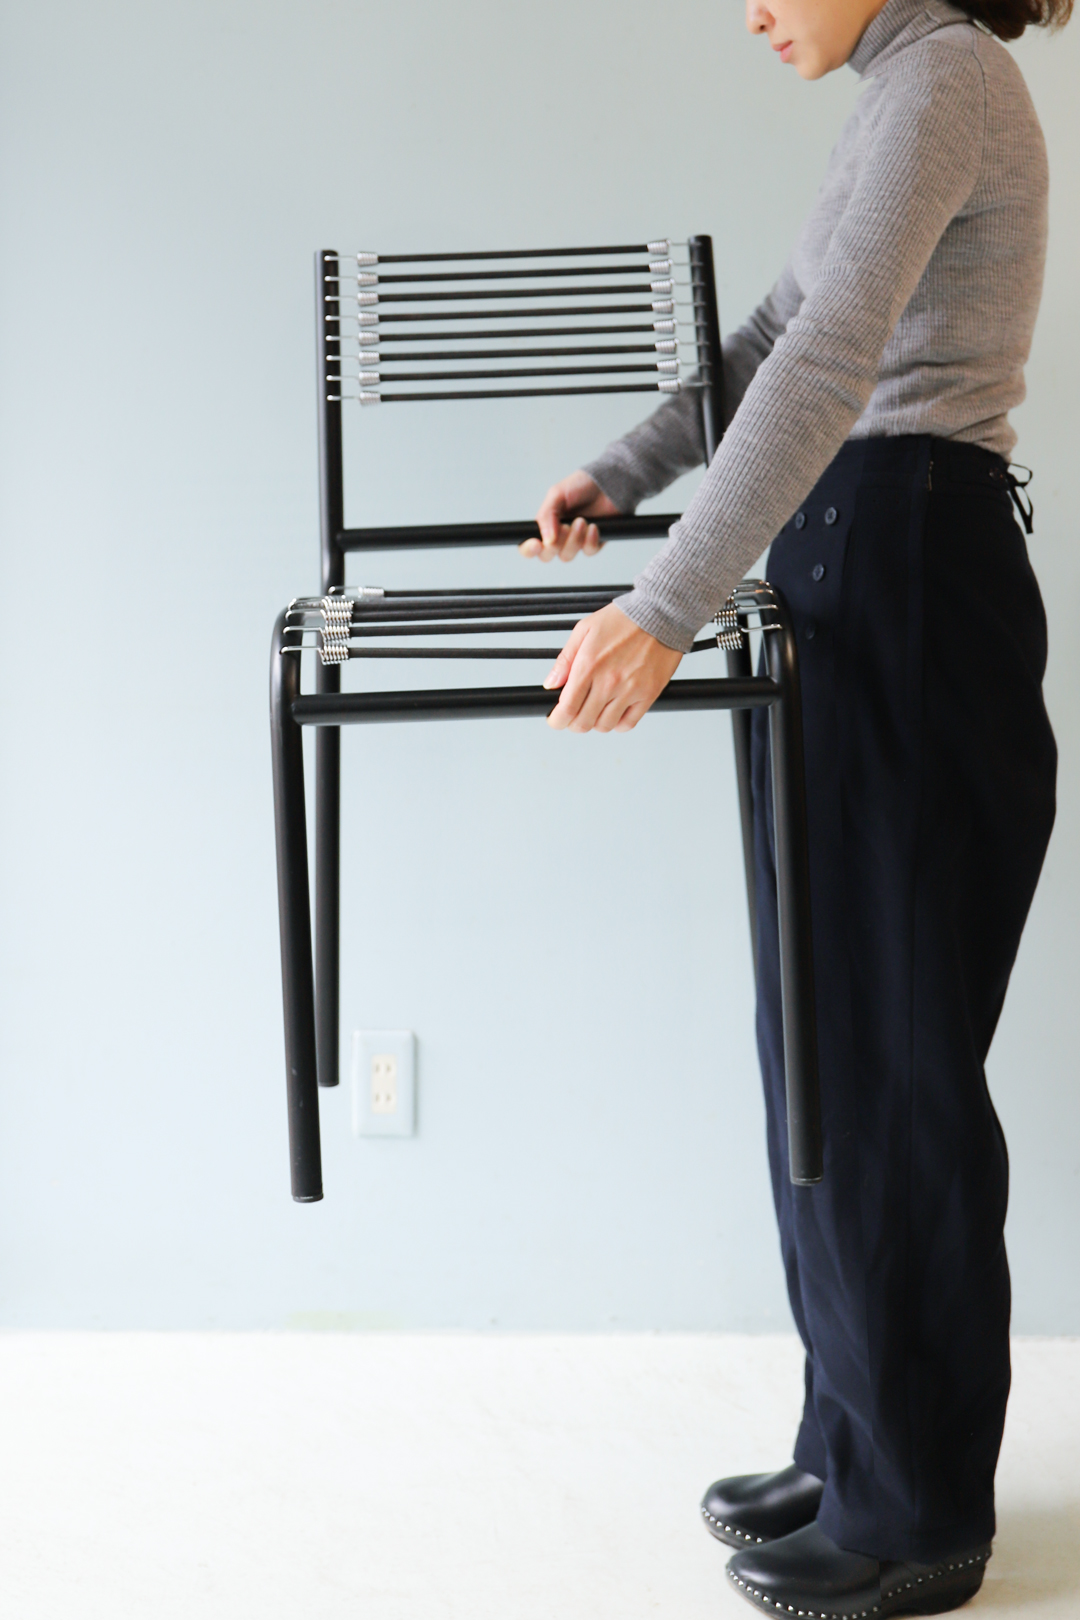 René Herbst Sandows Chair/ルネ・エルブスト サンドウズチェア ダイニングチェア 椅子 ブラック モダンデザイン